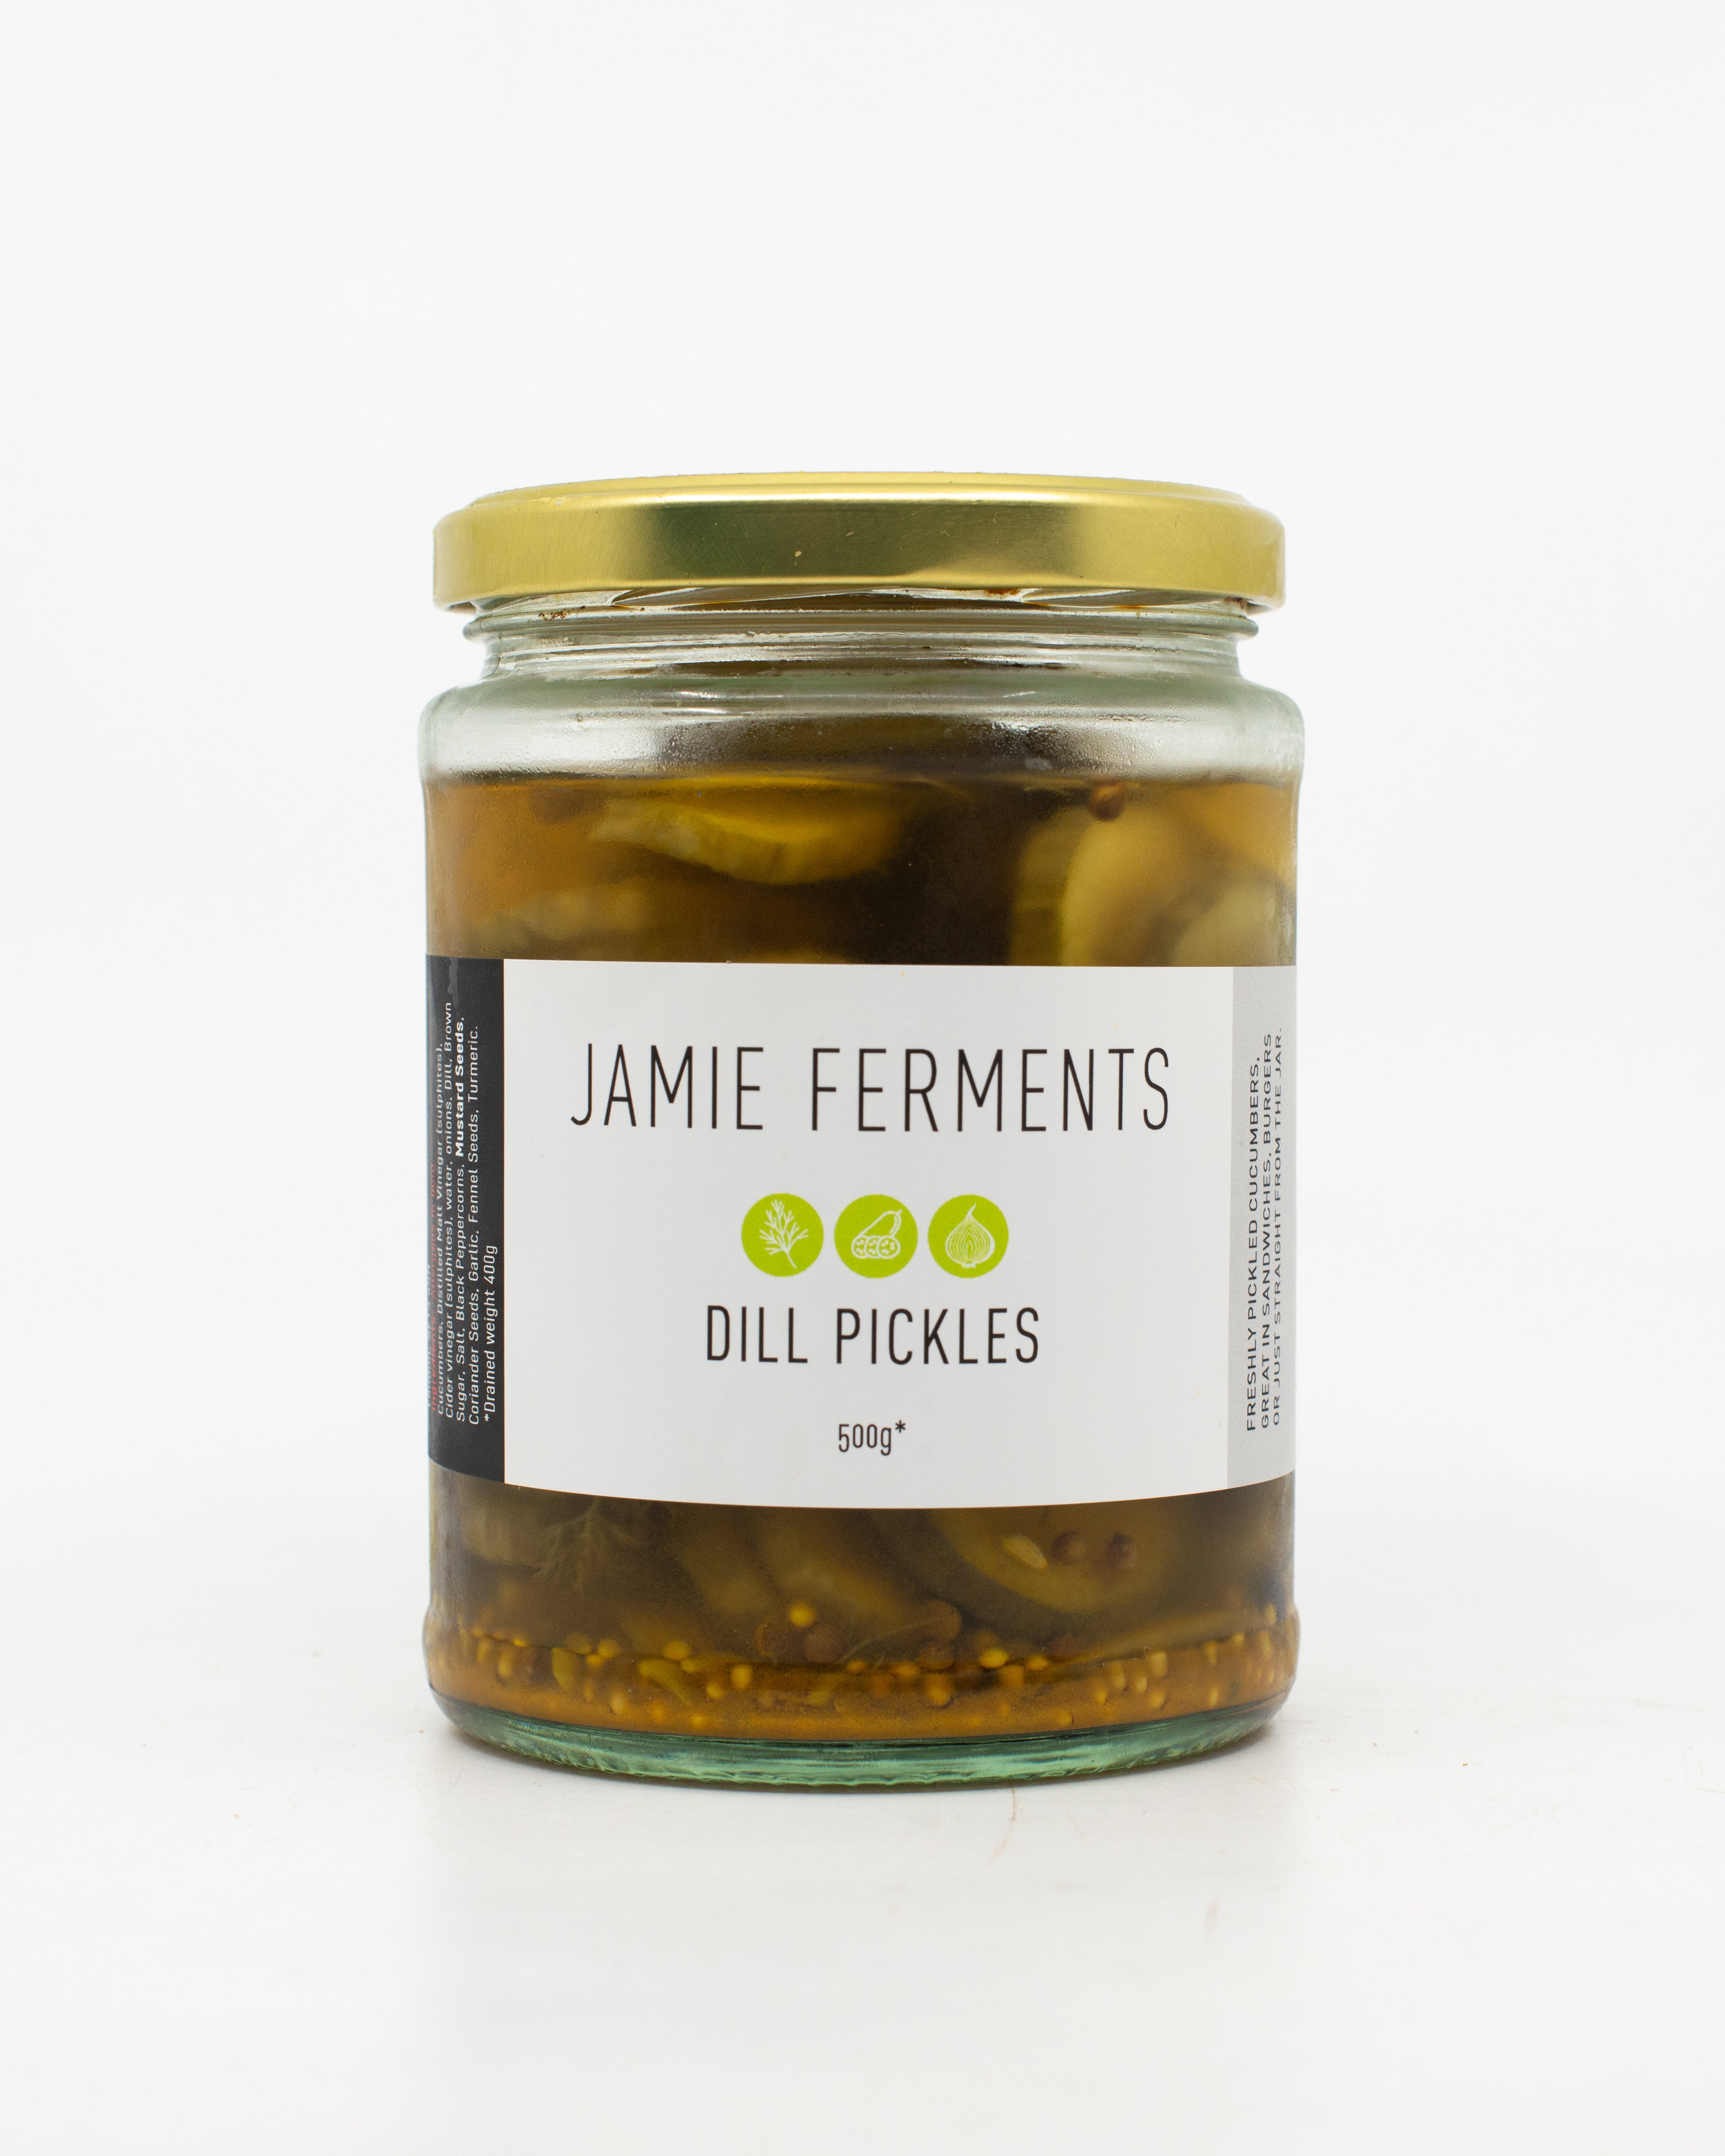 Jamie Ferments Dill Pickles